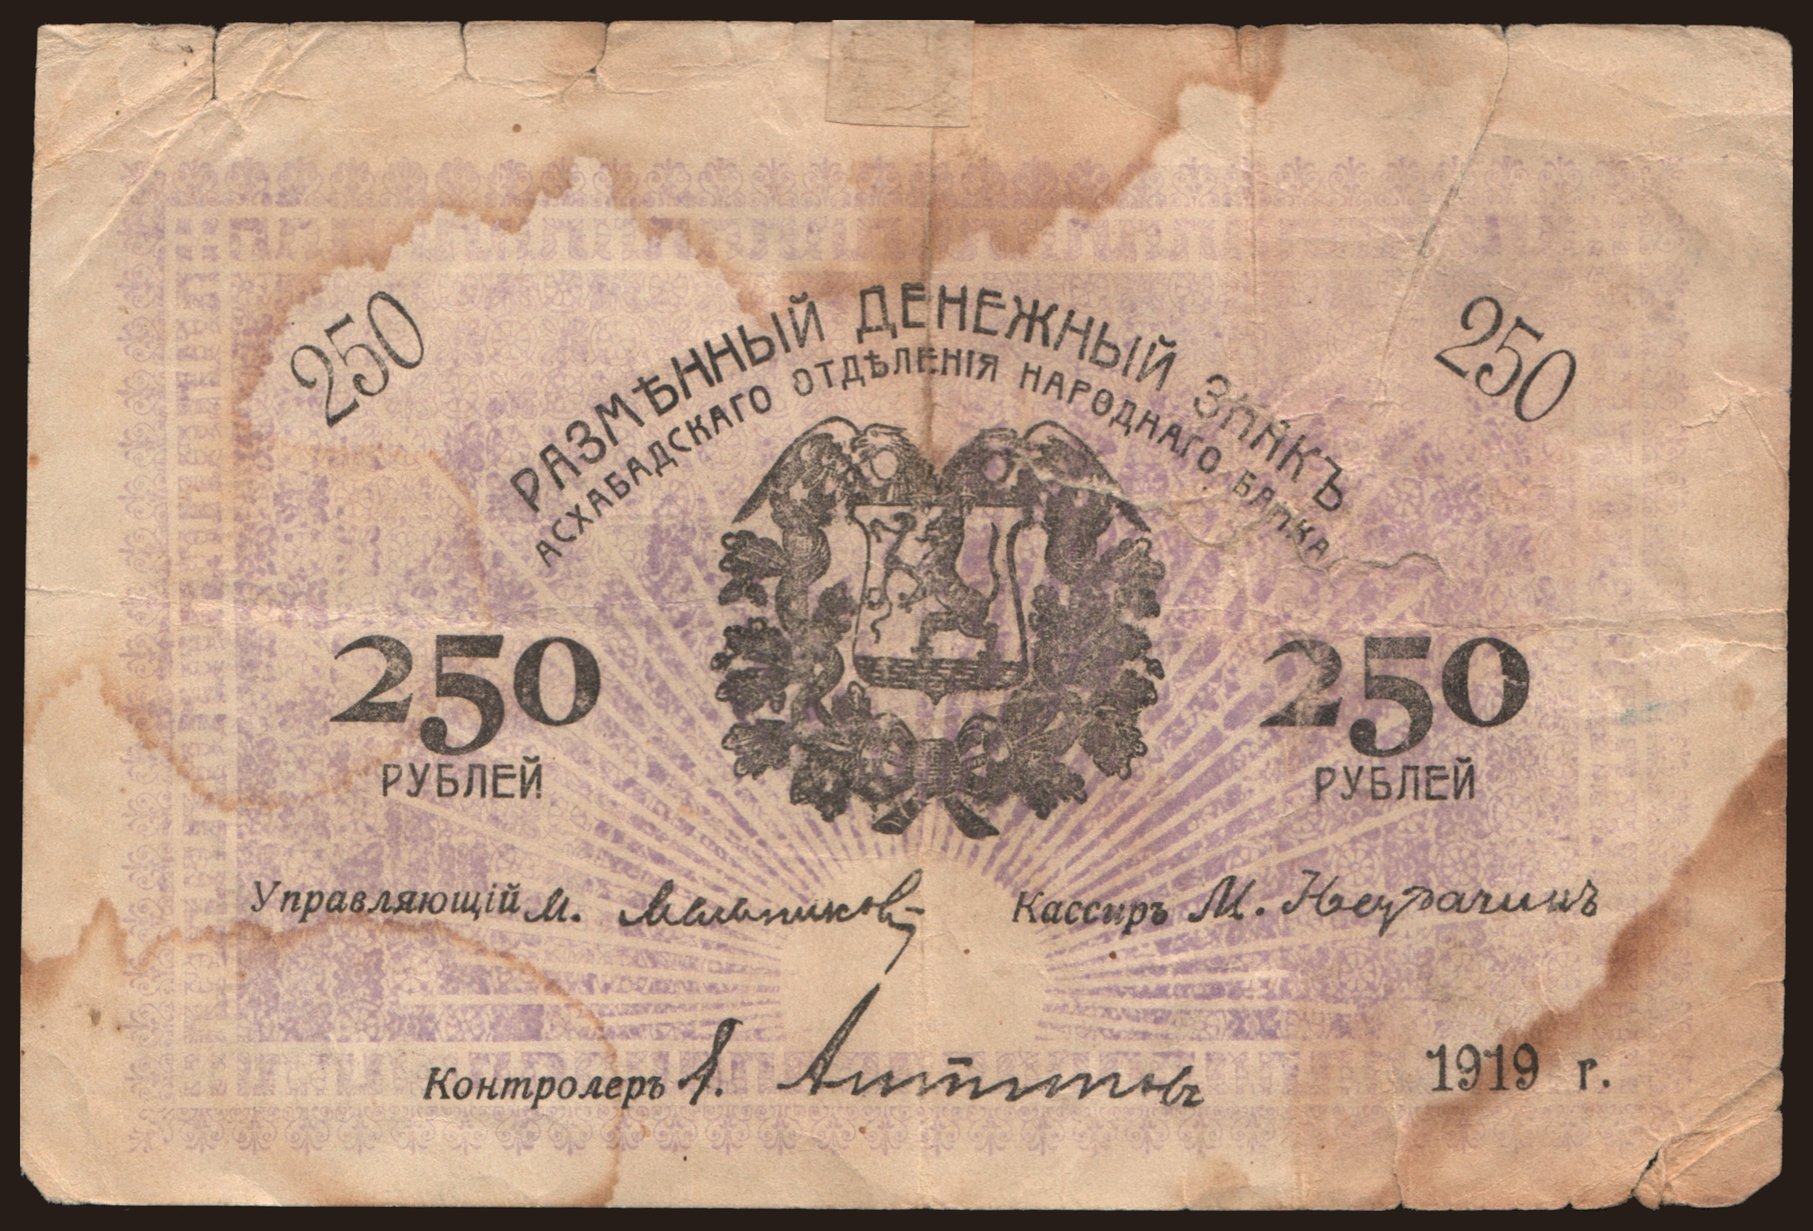 Askhabad, 250 rubel, 1919